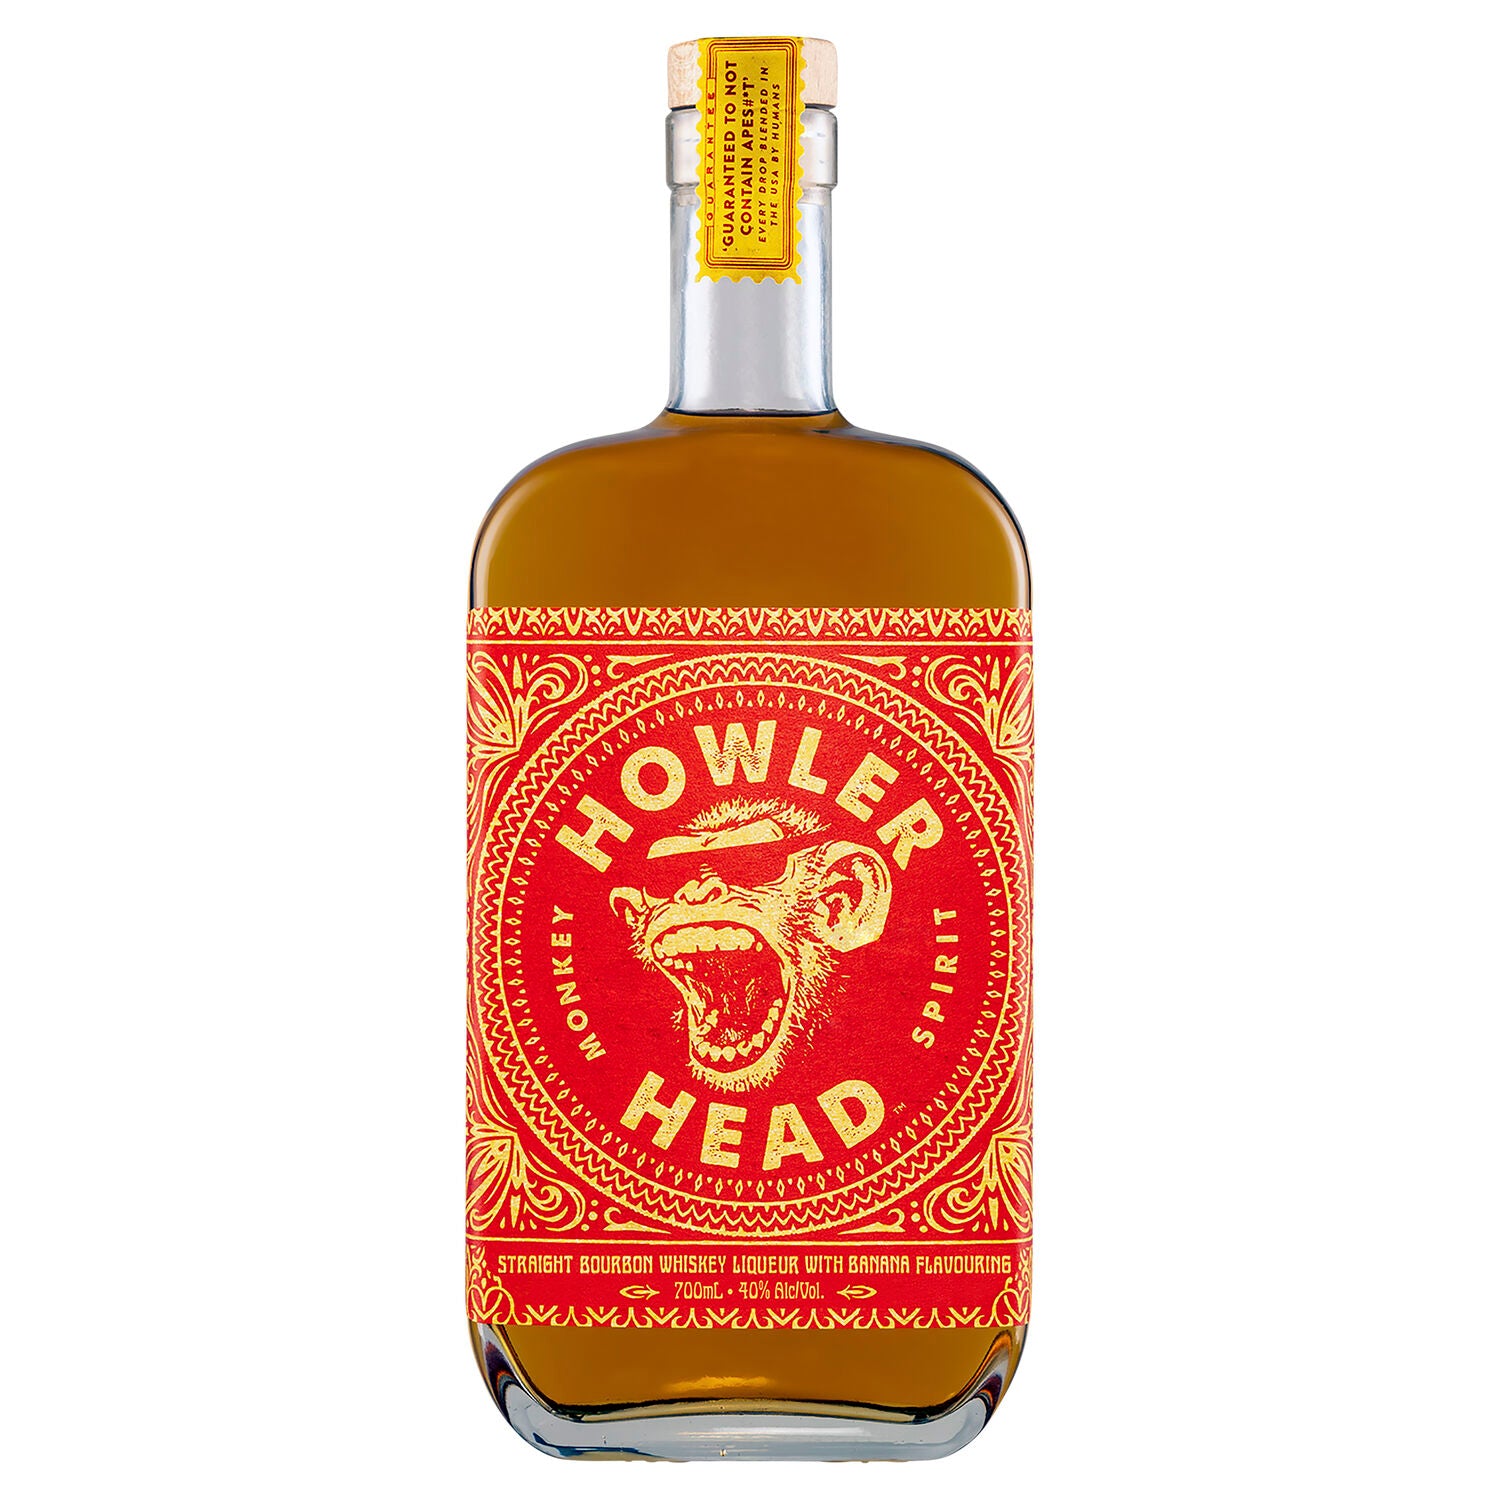 Howler Head Kentucky Straight Banana Infused Bourbon Whiskey 700mL